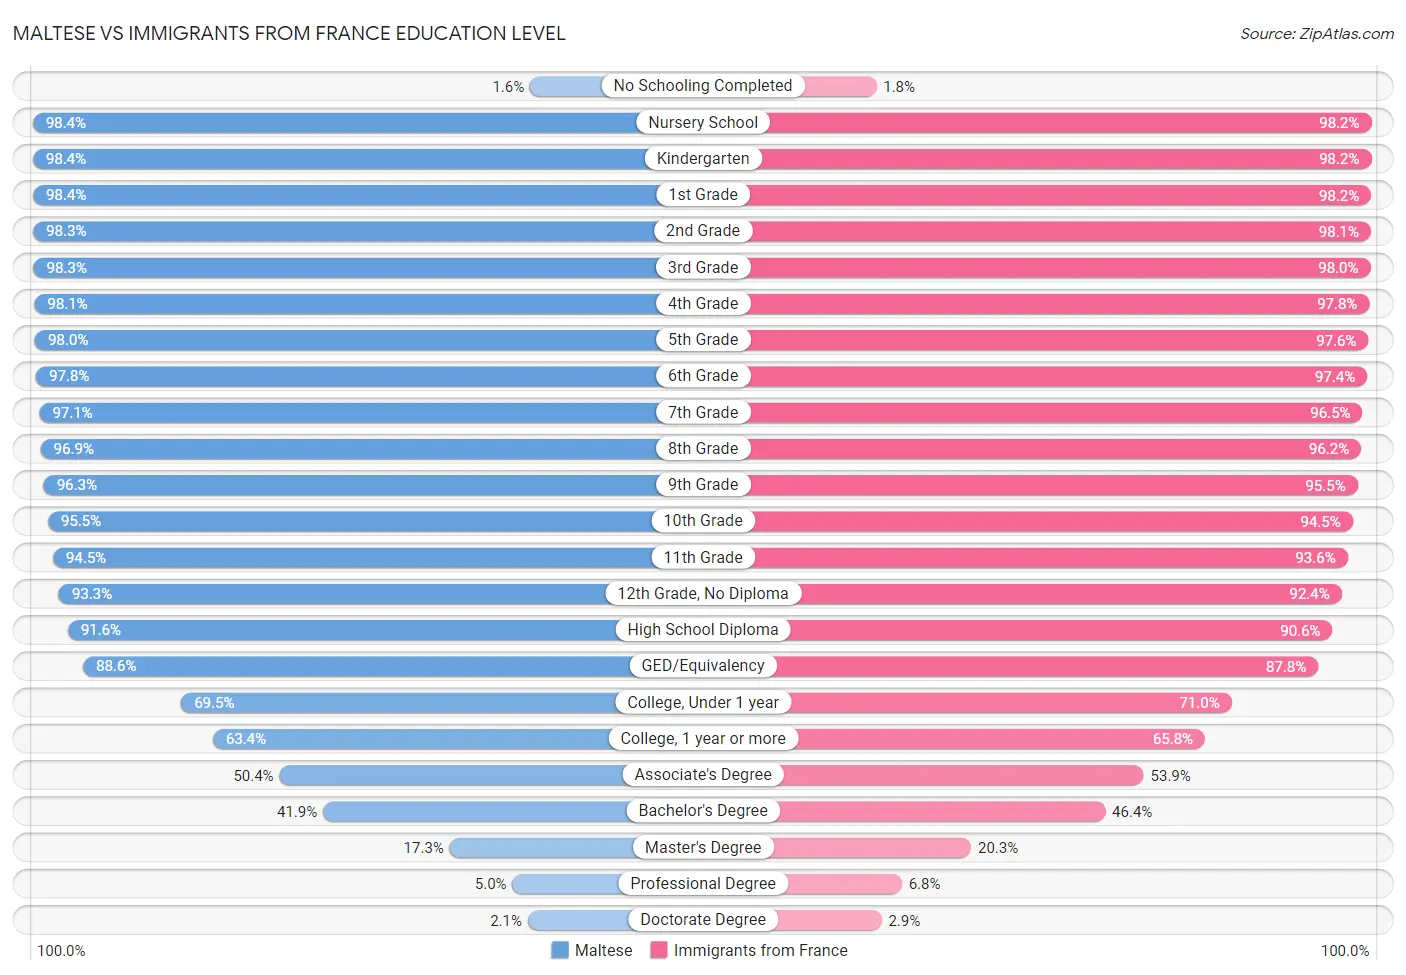 Maltese vs Immigrants from France Education Level